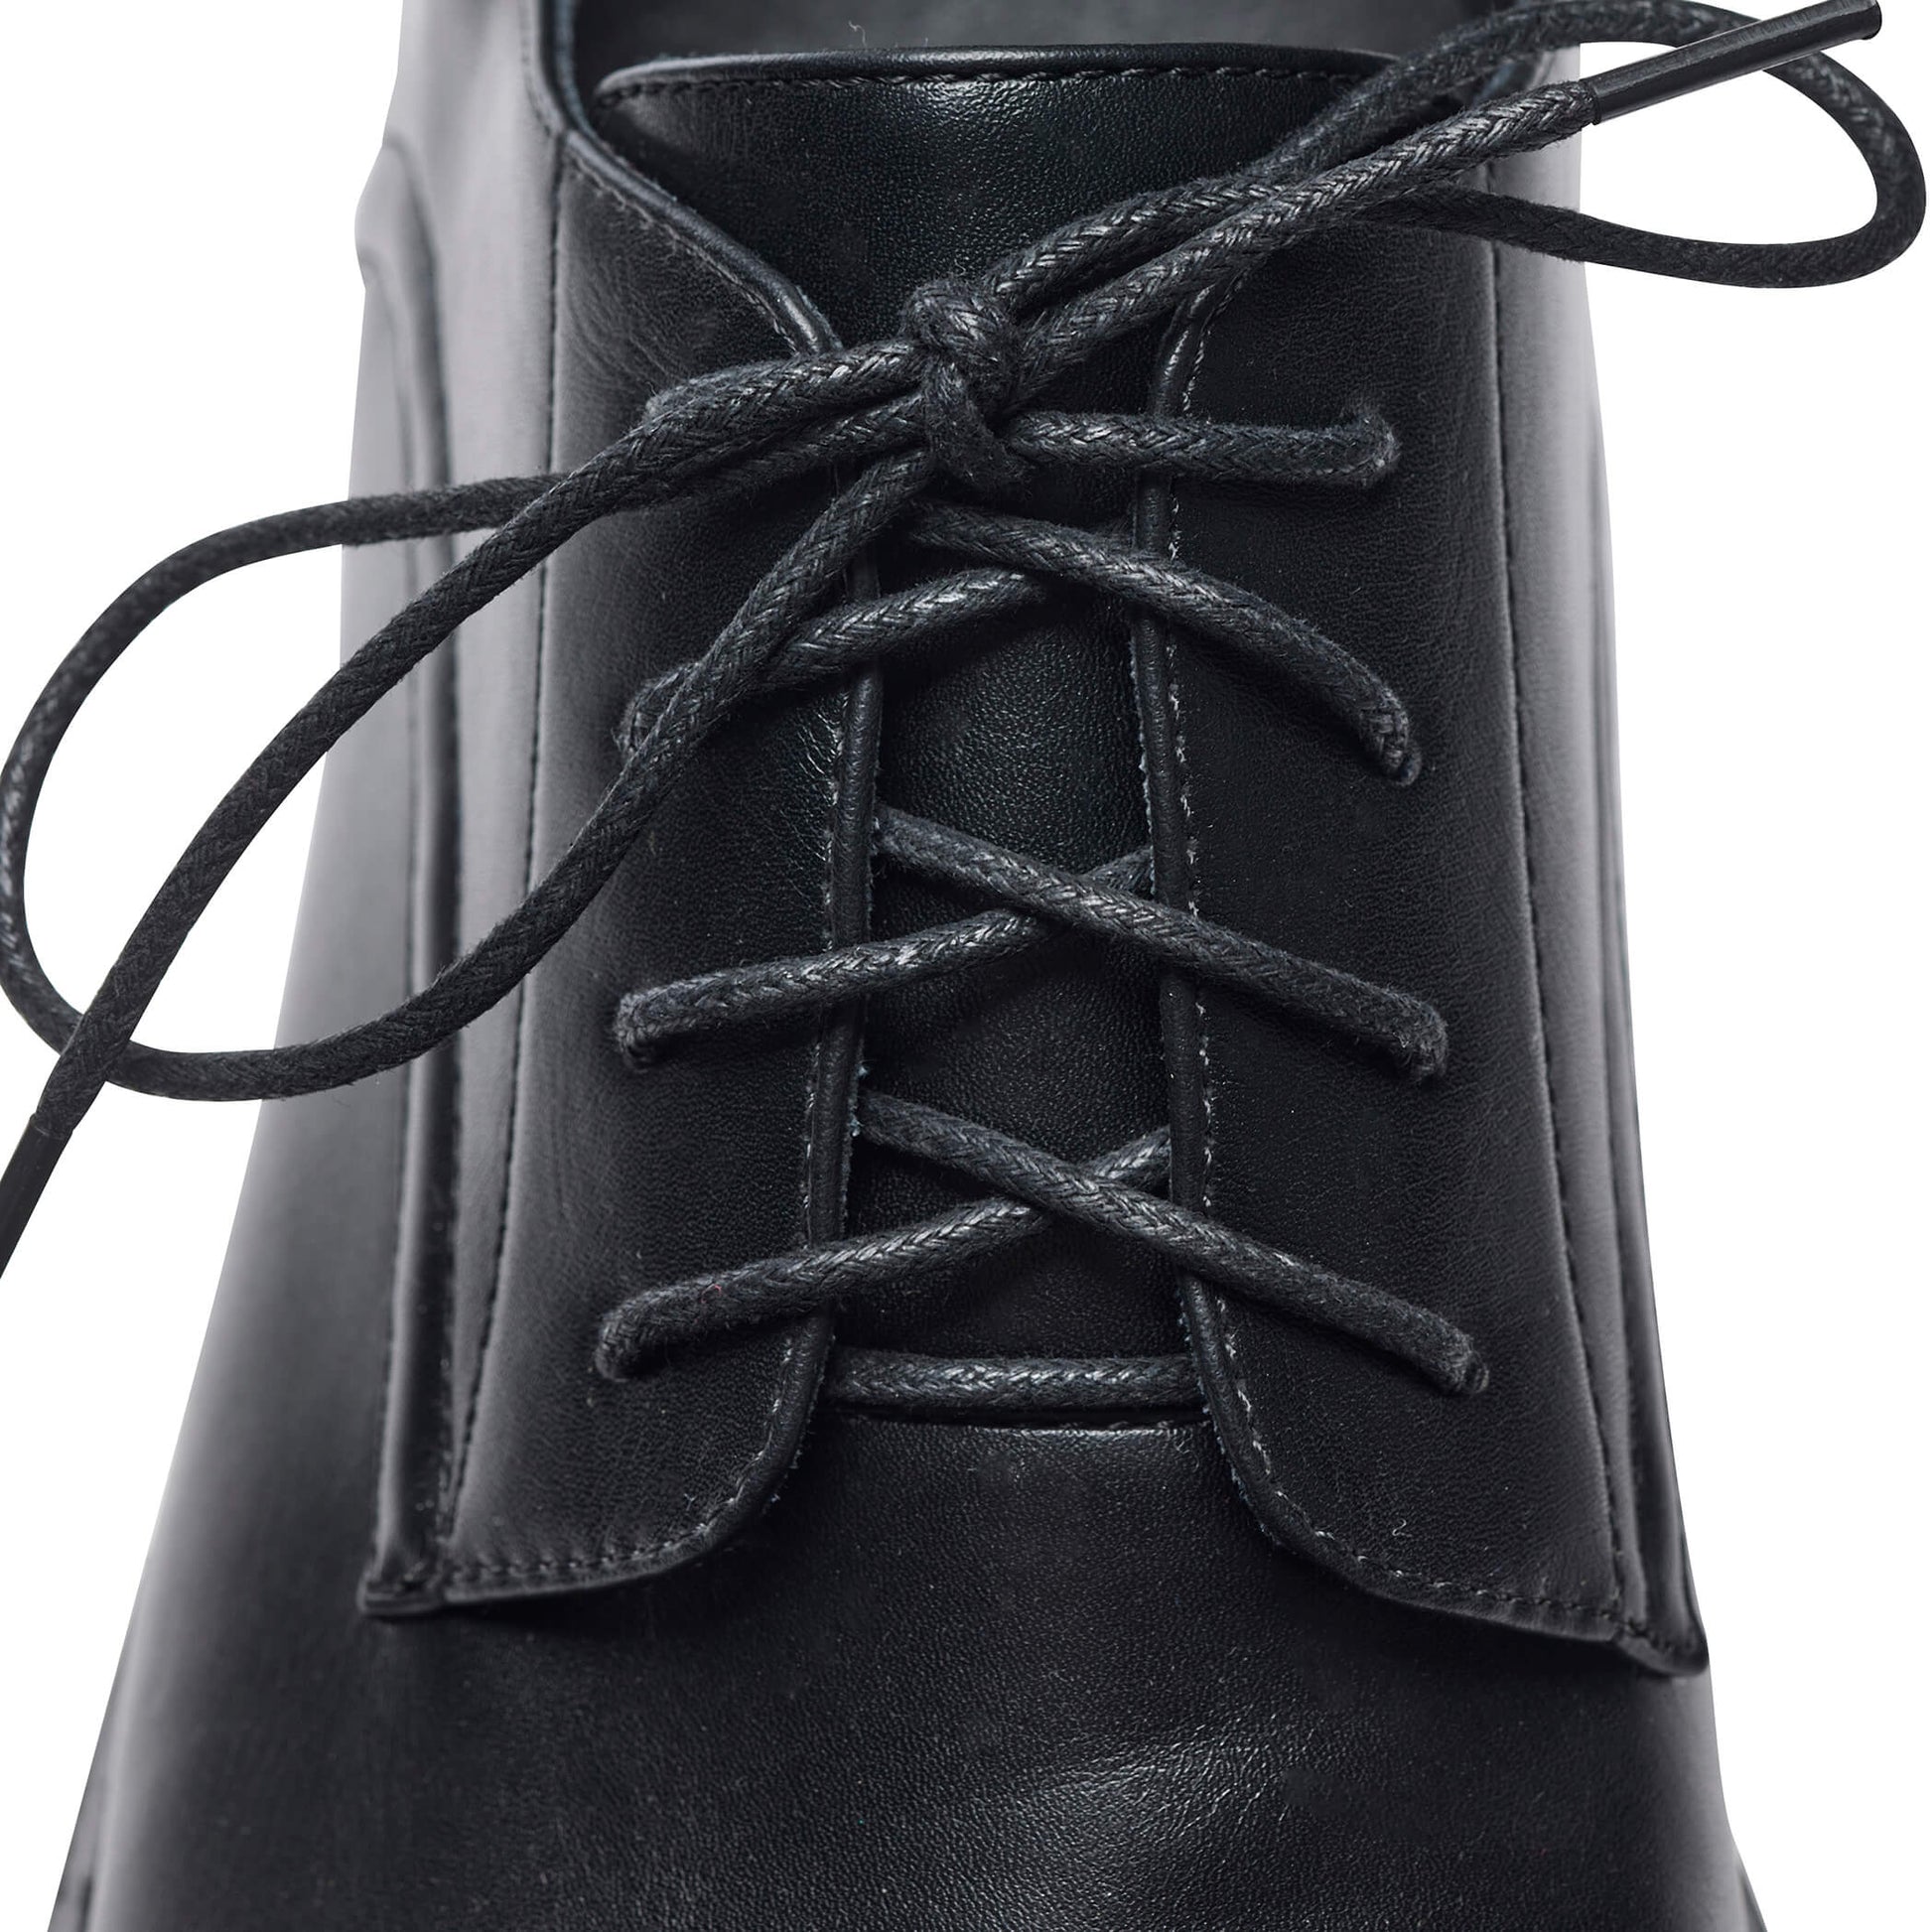 400% Oversized Derby Shoes - Black - Koi Footwear - Lace Details